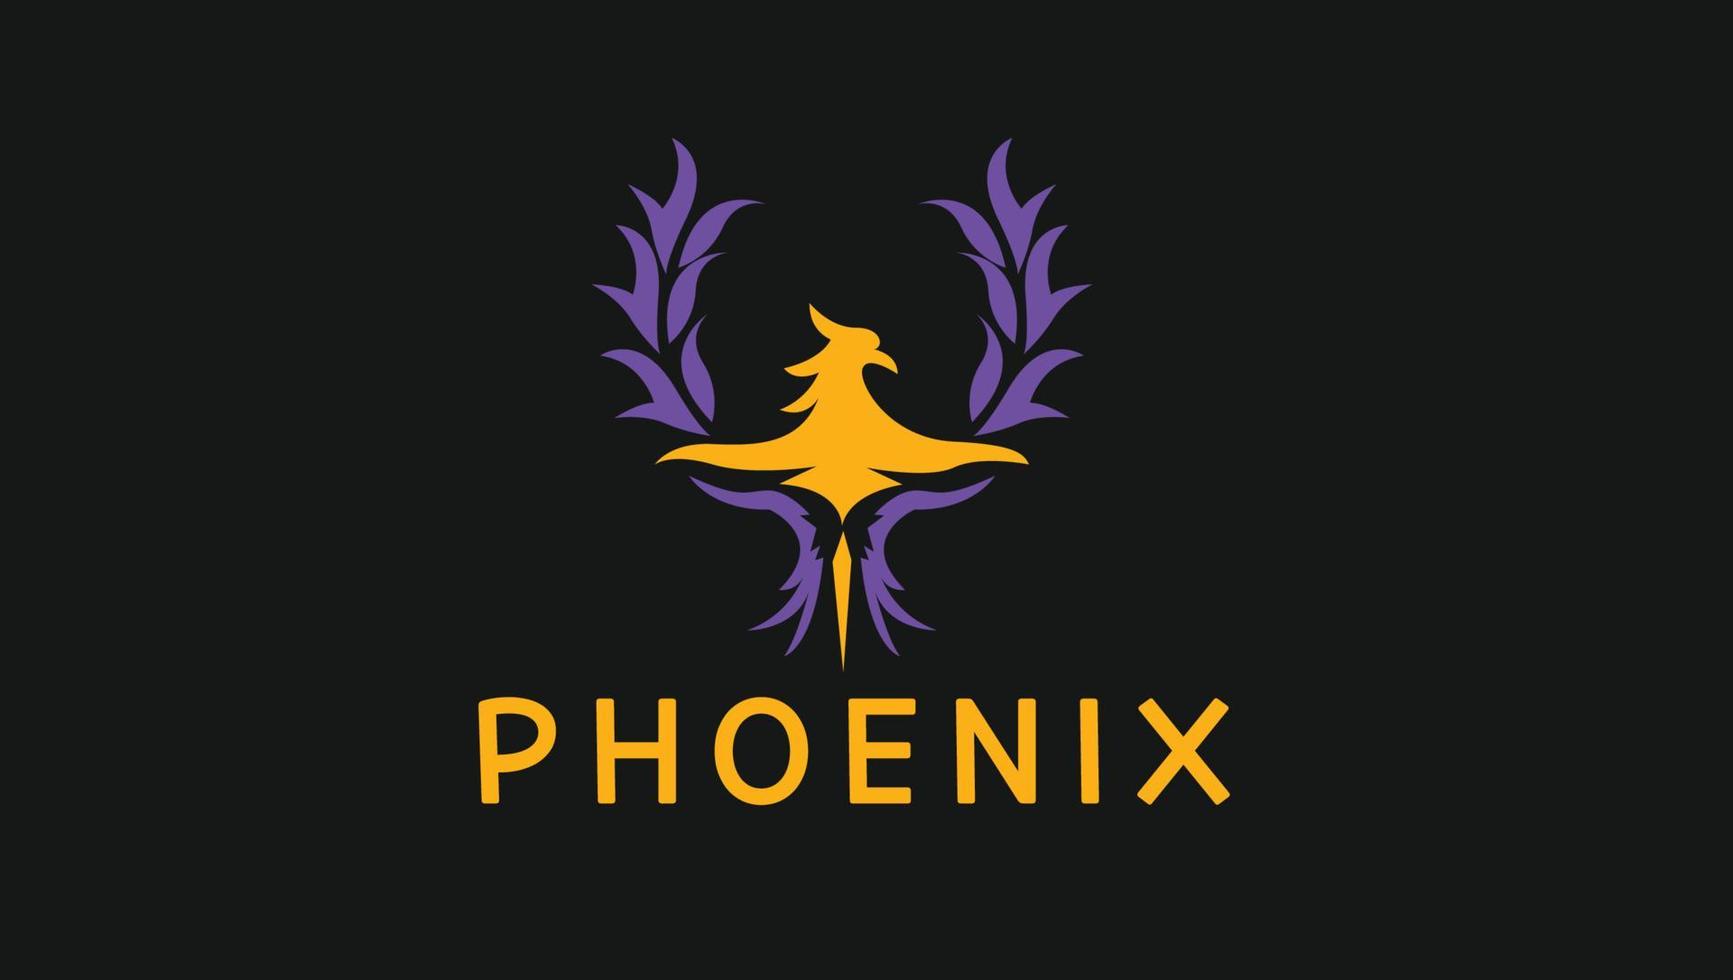 Phoenix moderne professionelle Kombinationsmarke Logo-Design-Vorlage vektor